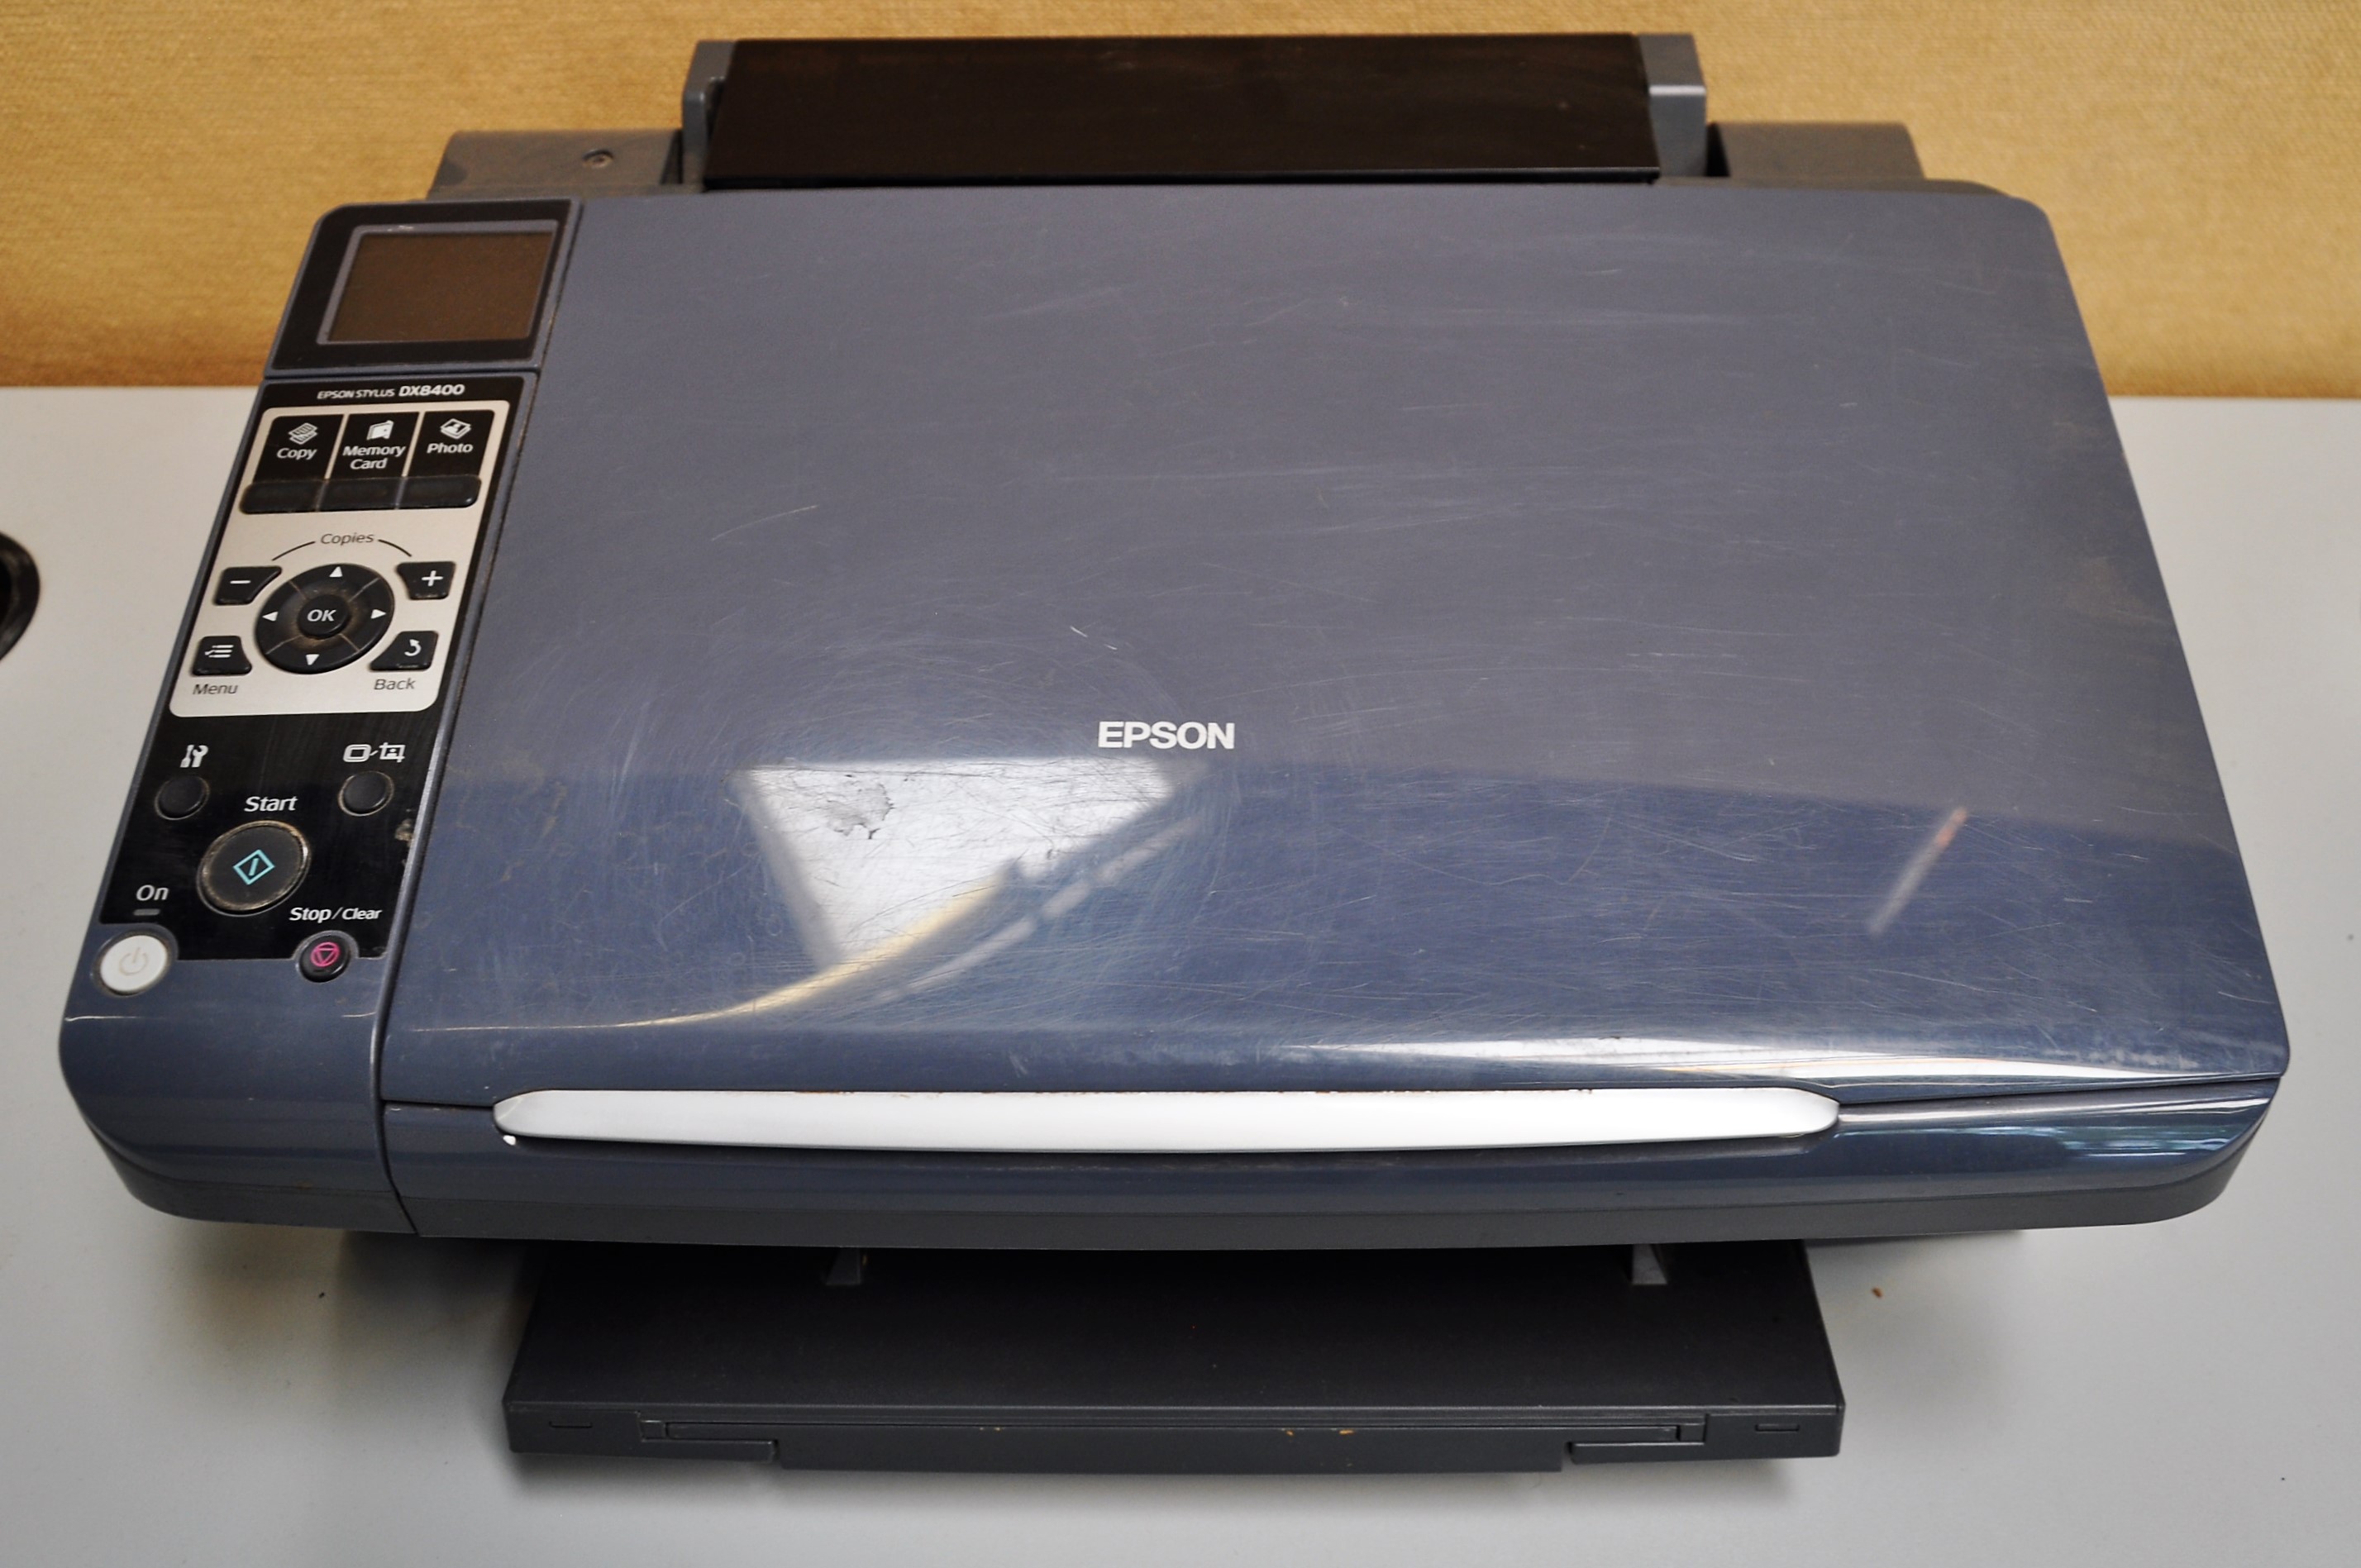 Epson Stylus Dx8400 Copierprinter 7715